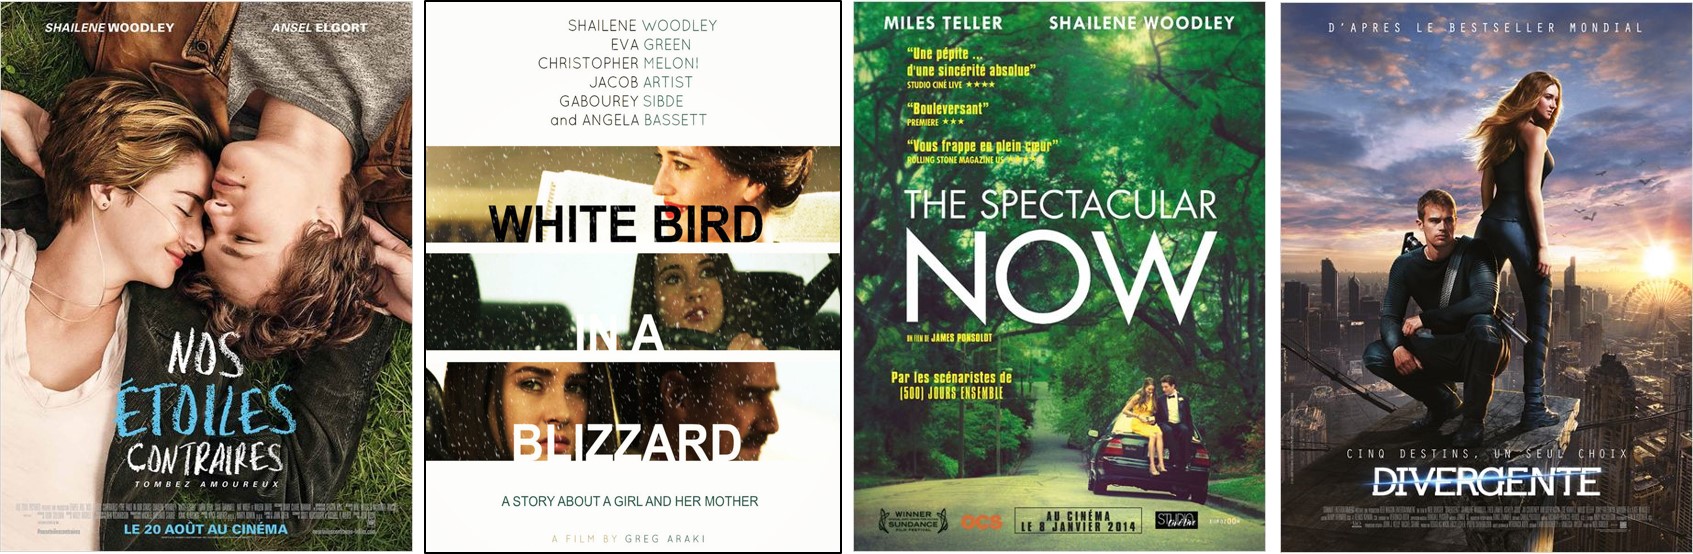 SHAILENE WOODLEY - affiches films 2014 alignées - Go with the Blog